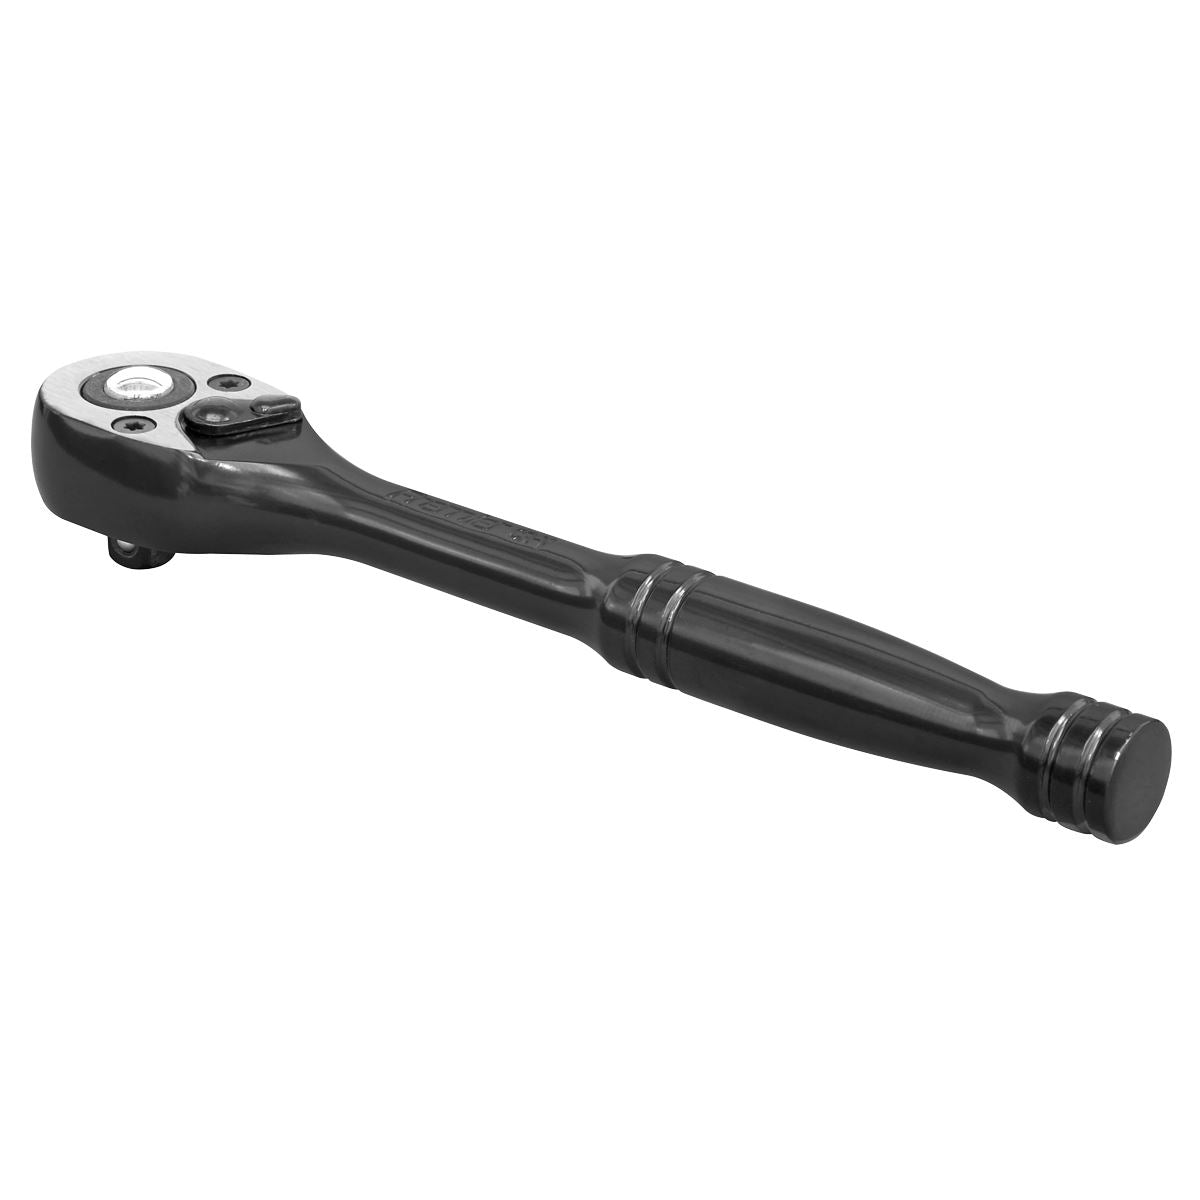 Sealey Premier Ratchet Wrench 1/4"Sq Drive - Premier Black